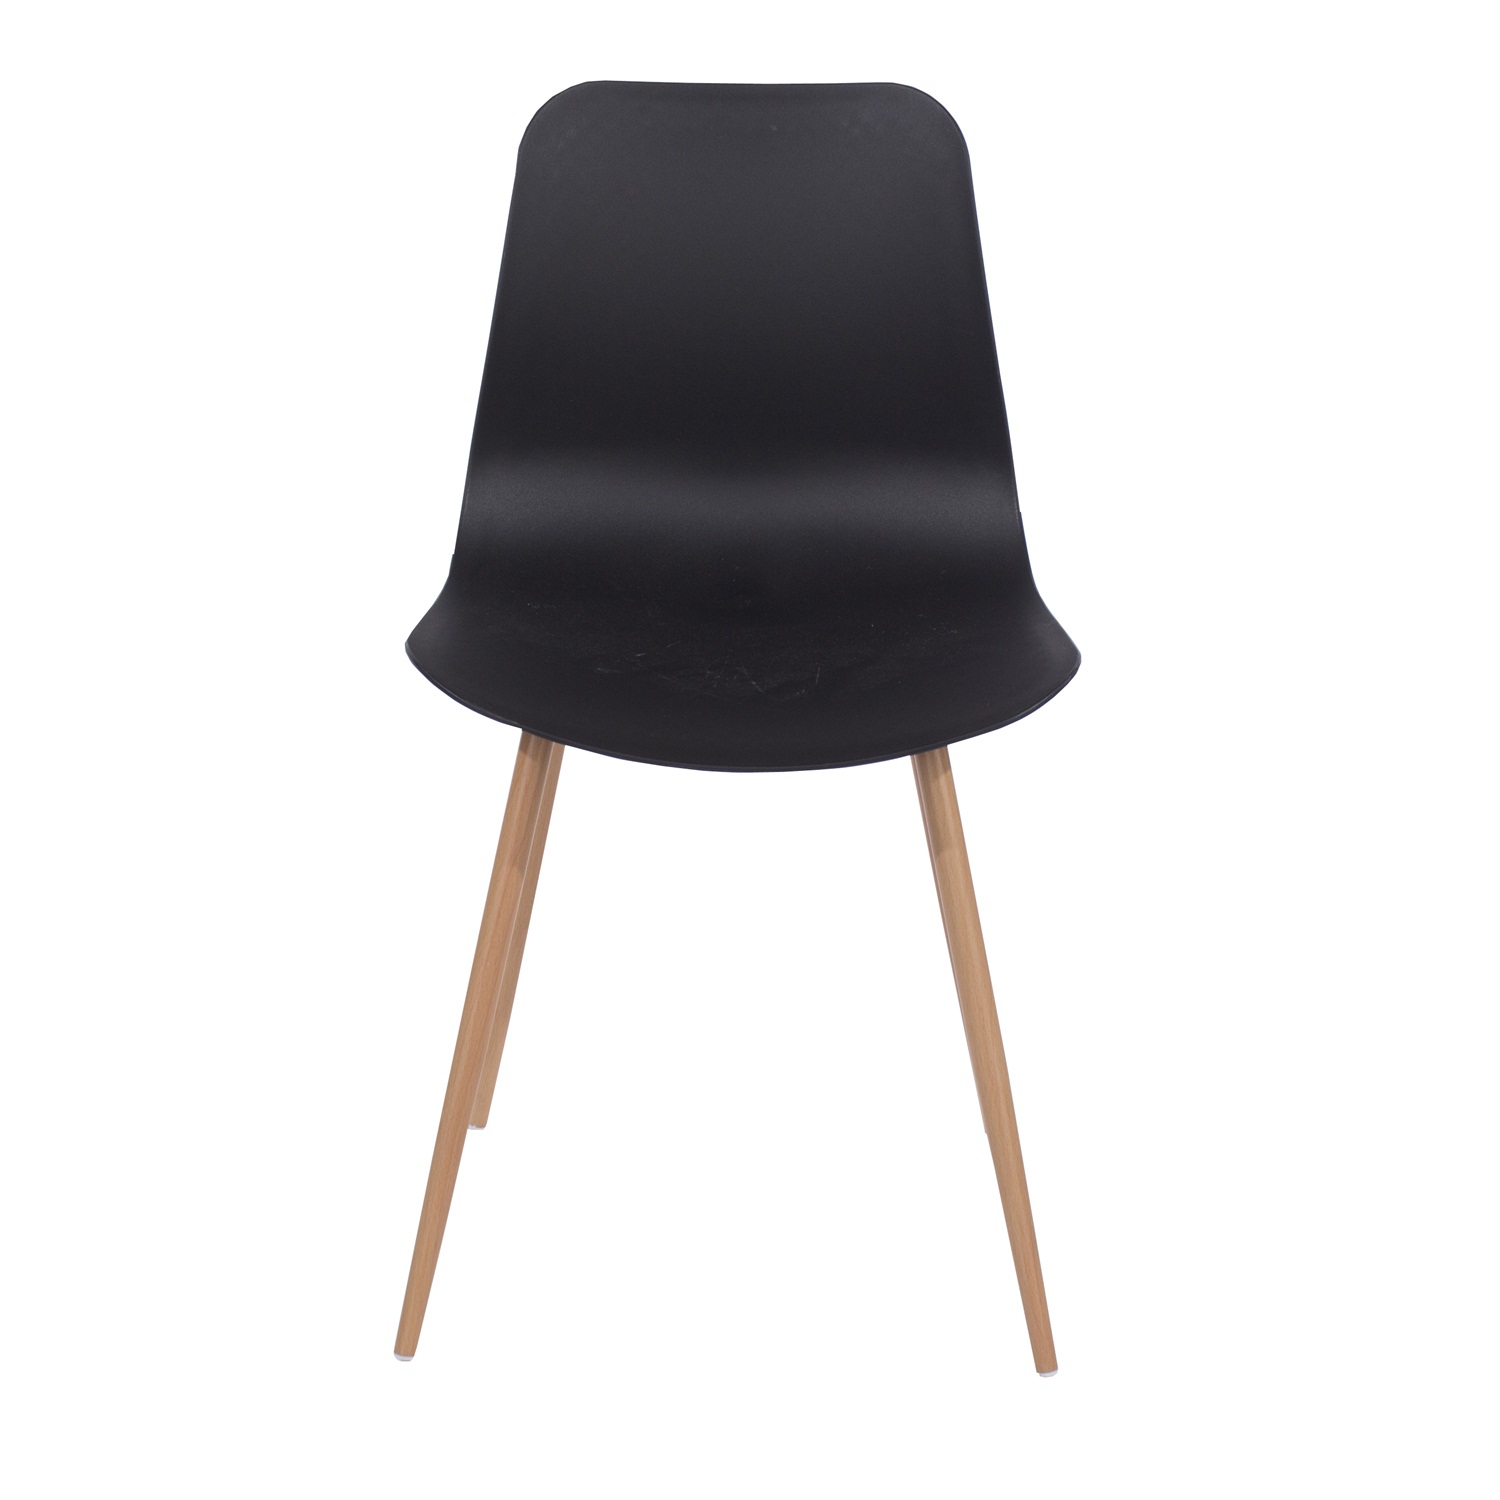 Black Plastic Chair Wood Effect Metal, Black Plastic Chair With Wood Legs